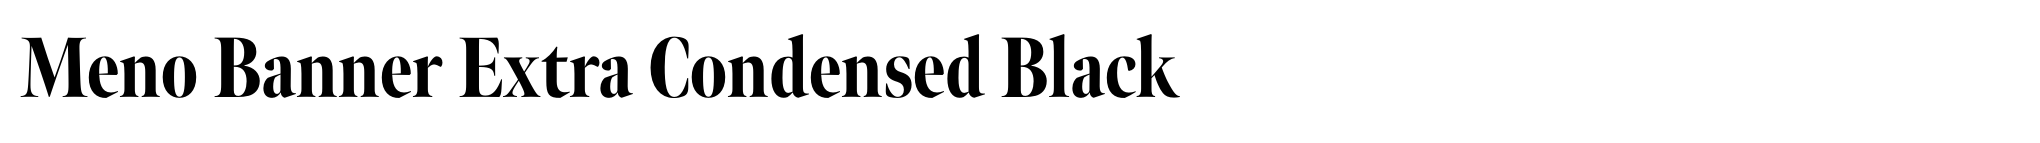 Meno Banner Extra Condensed Black image